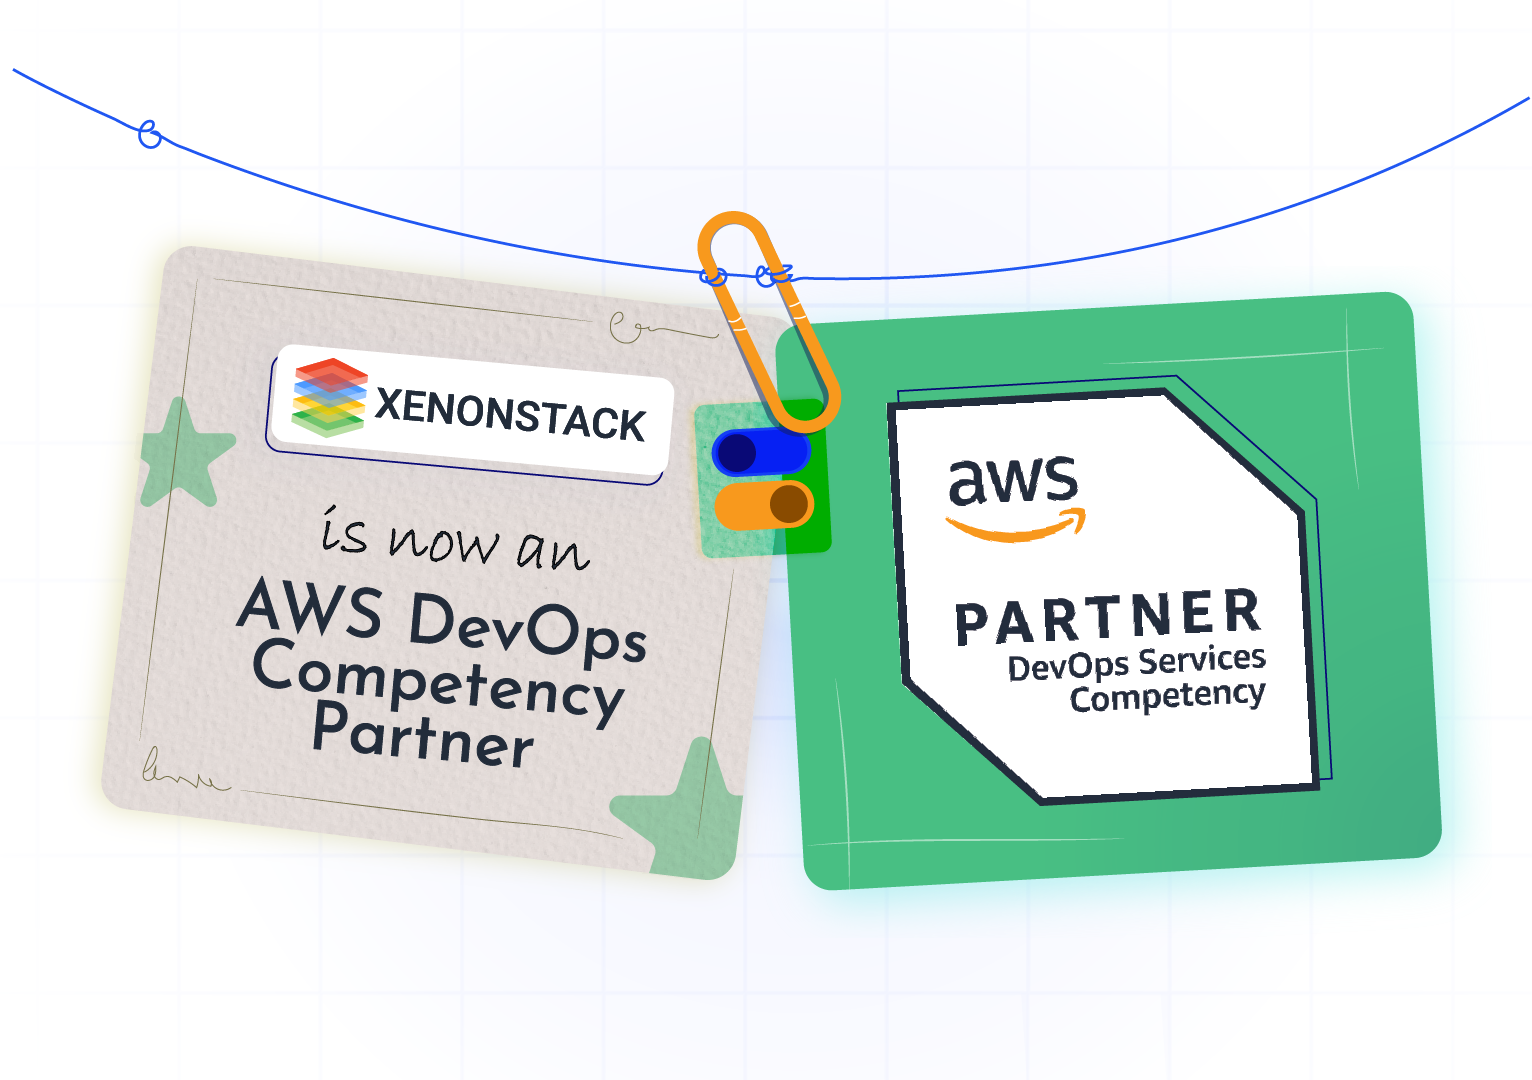 XenonStack has become DevOps Competency Partners